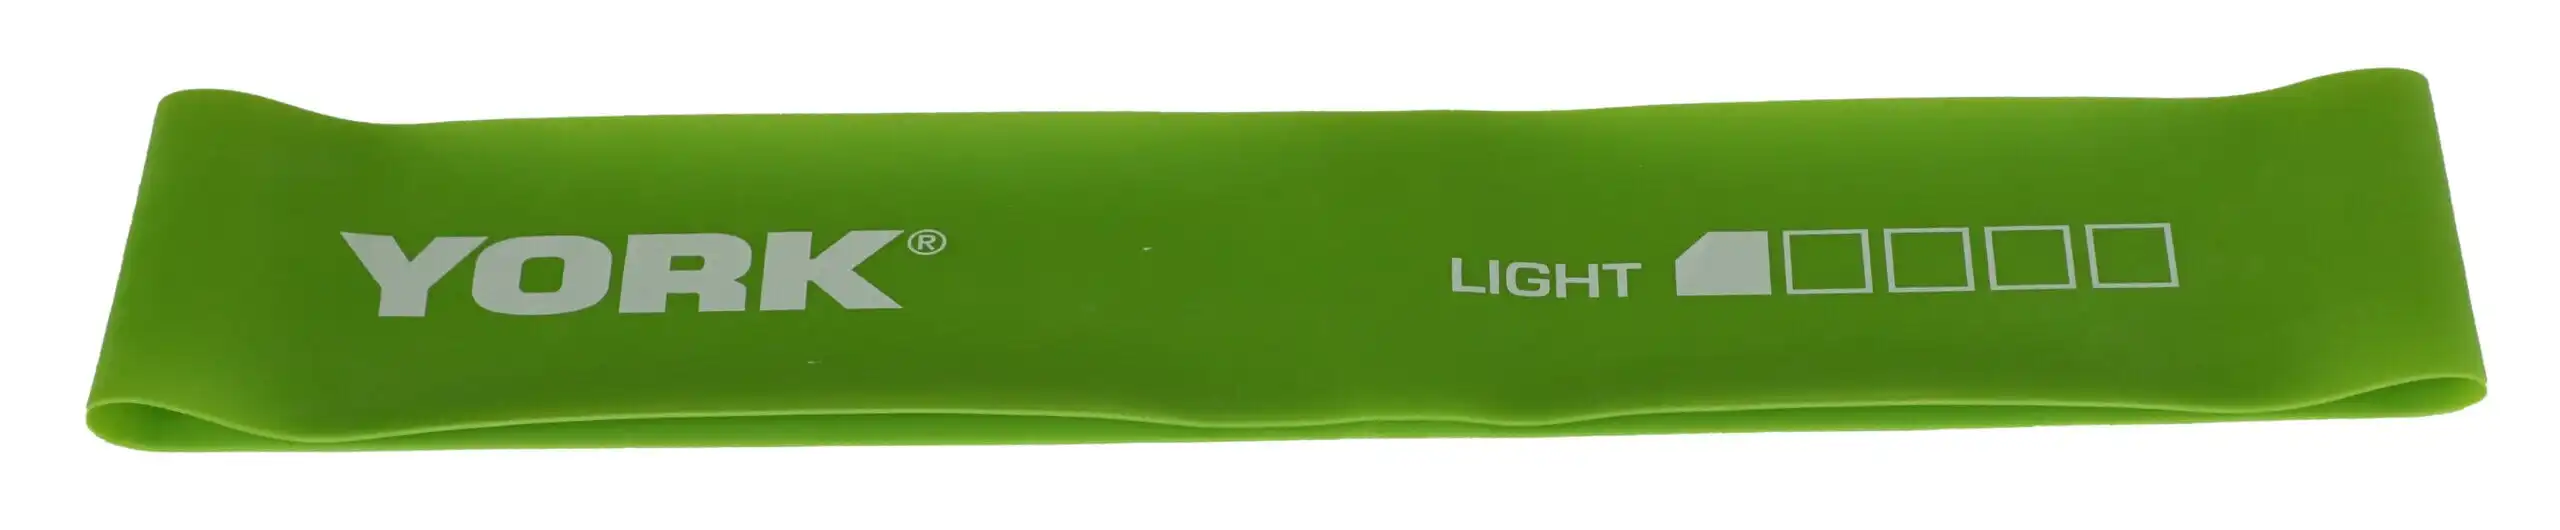 York Fitness Resistance Loop Light (Green)